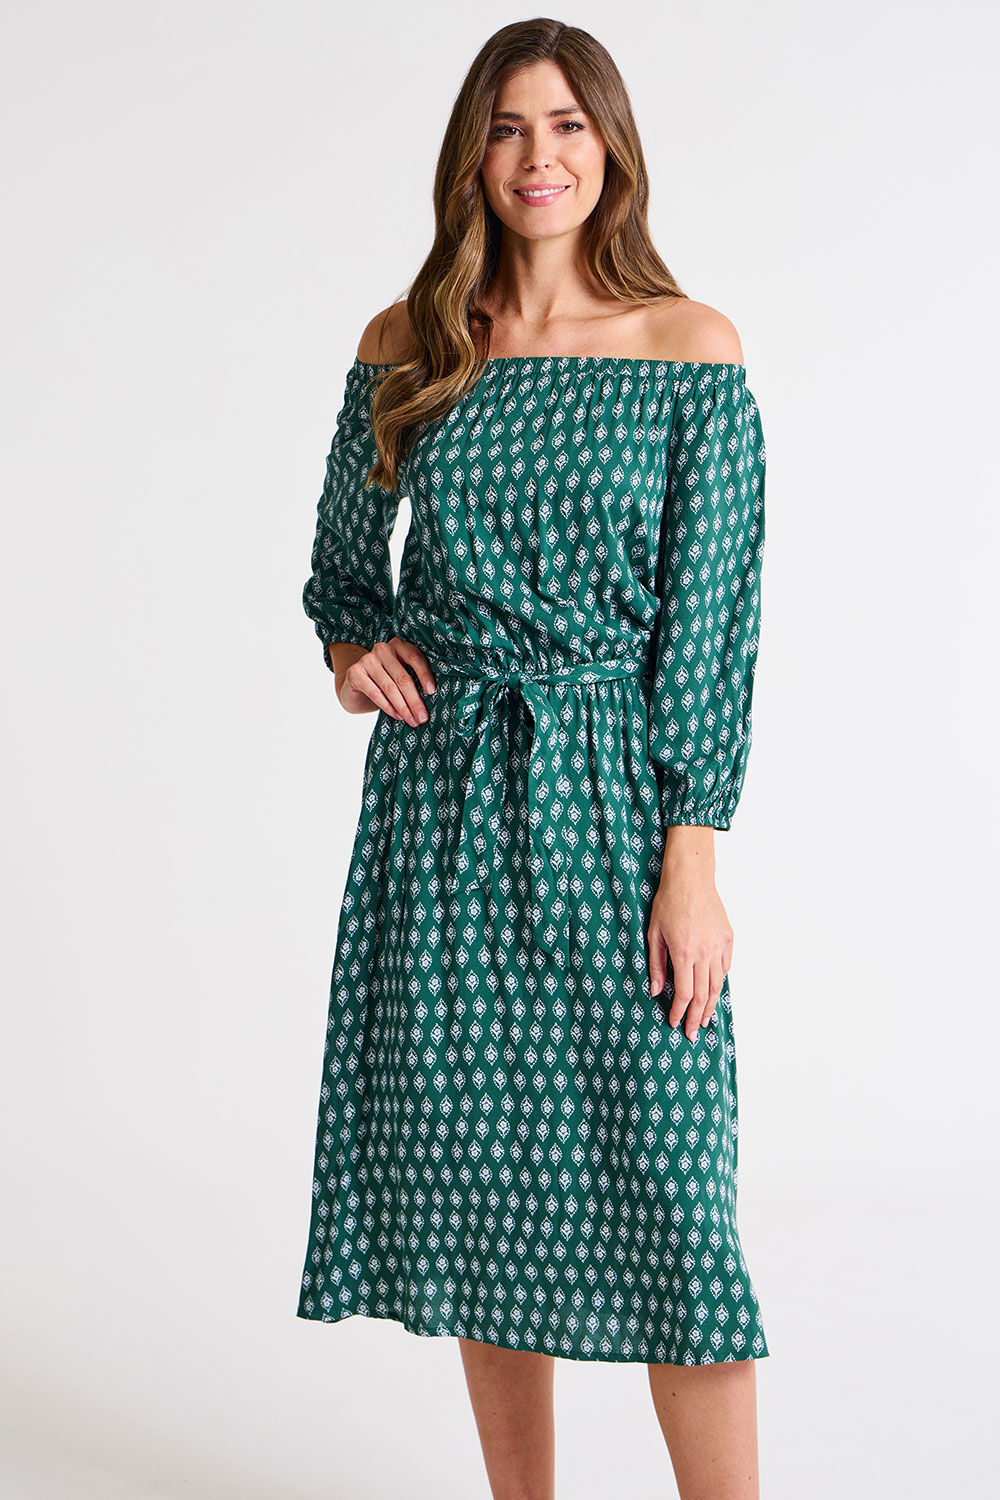 Bonmarche Green Tile Print Belted Bardot Dress, Size: 10